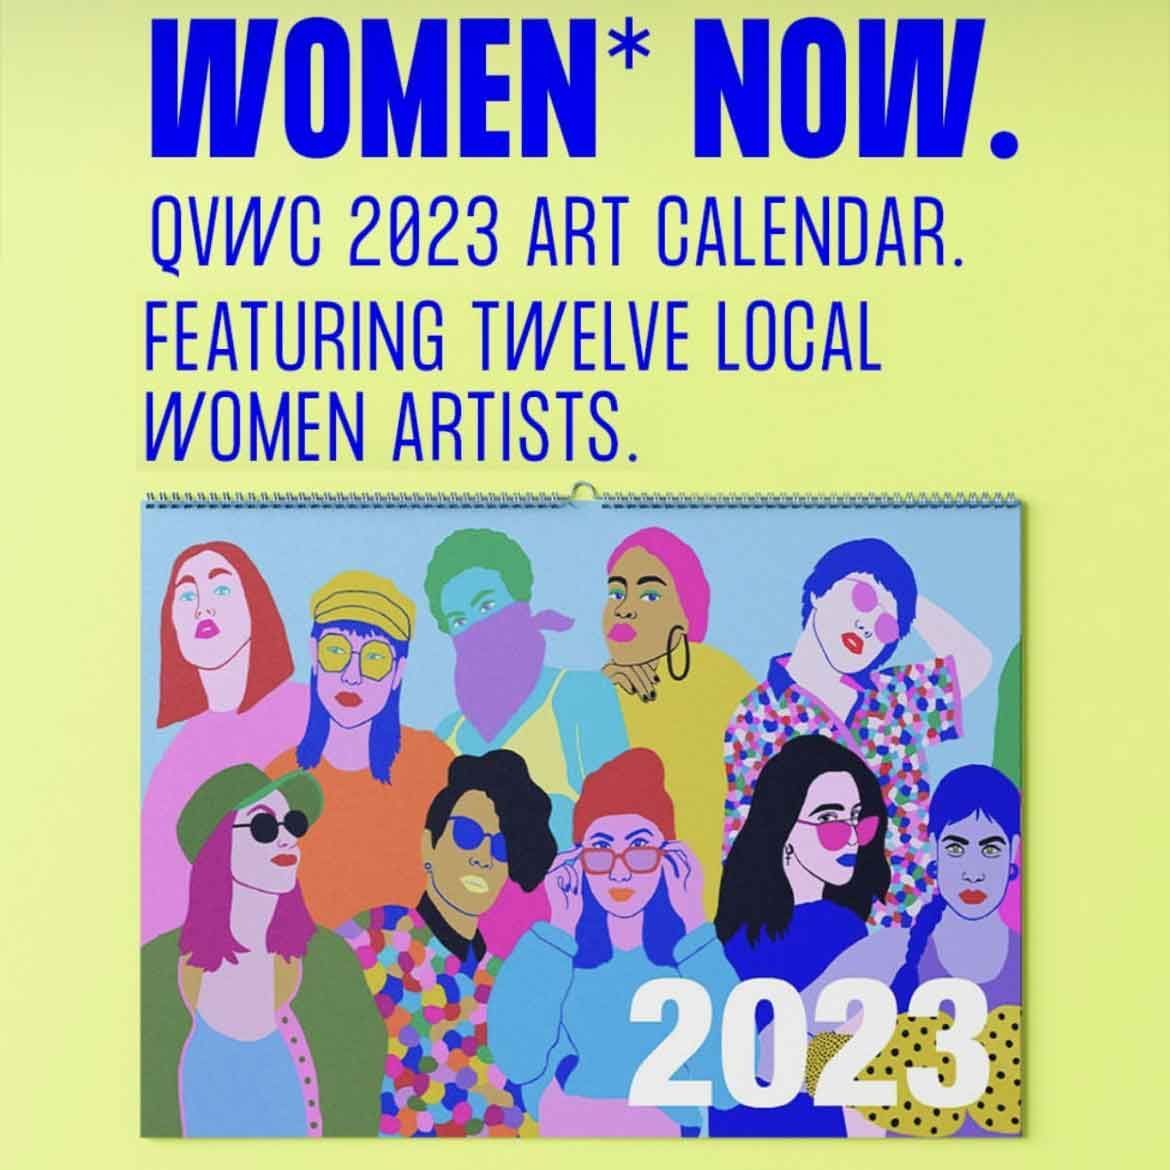 QVWC Women Now